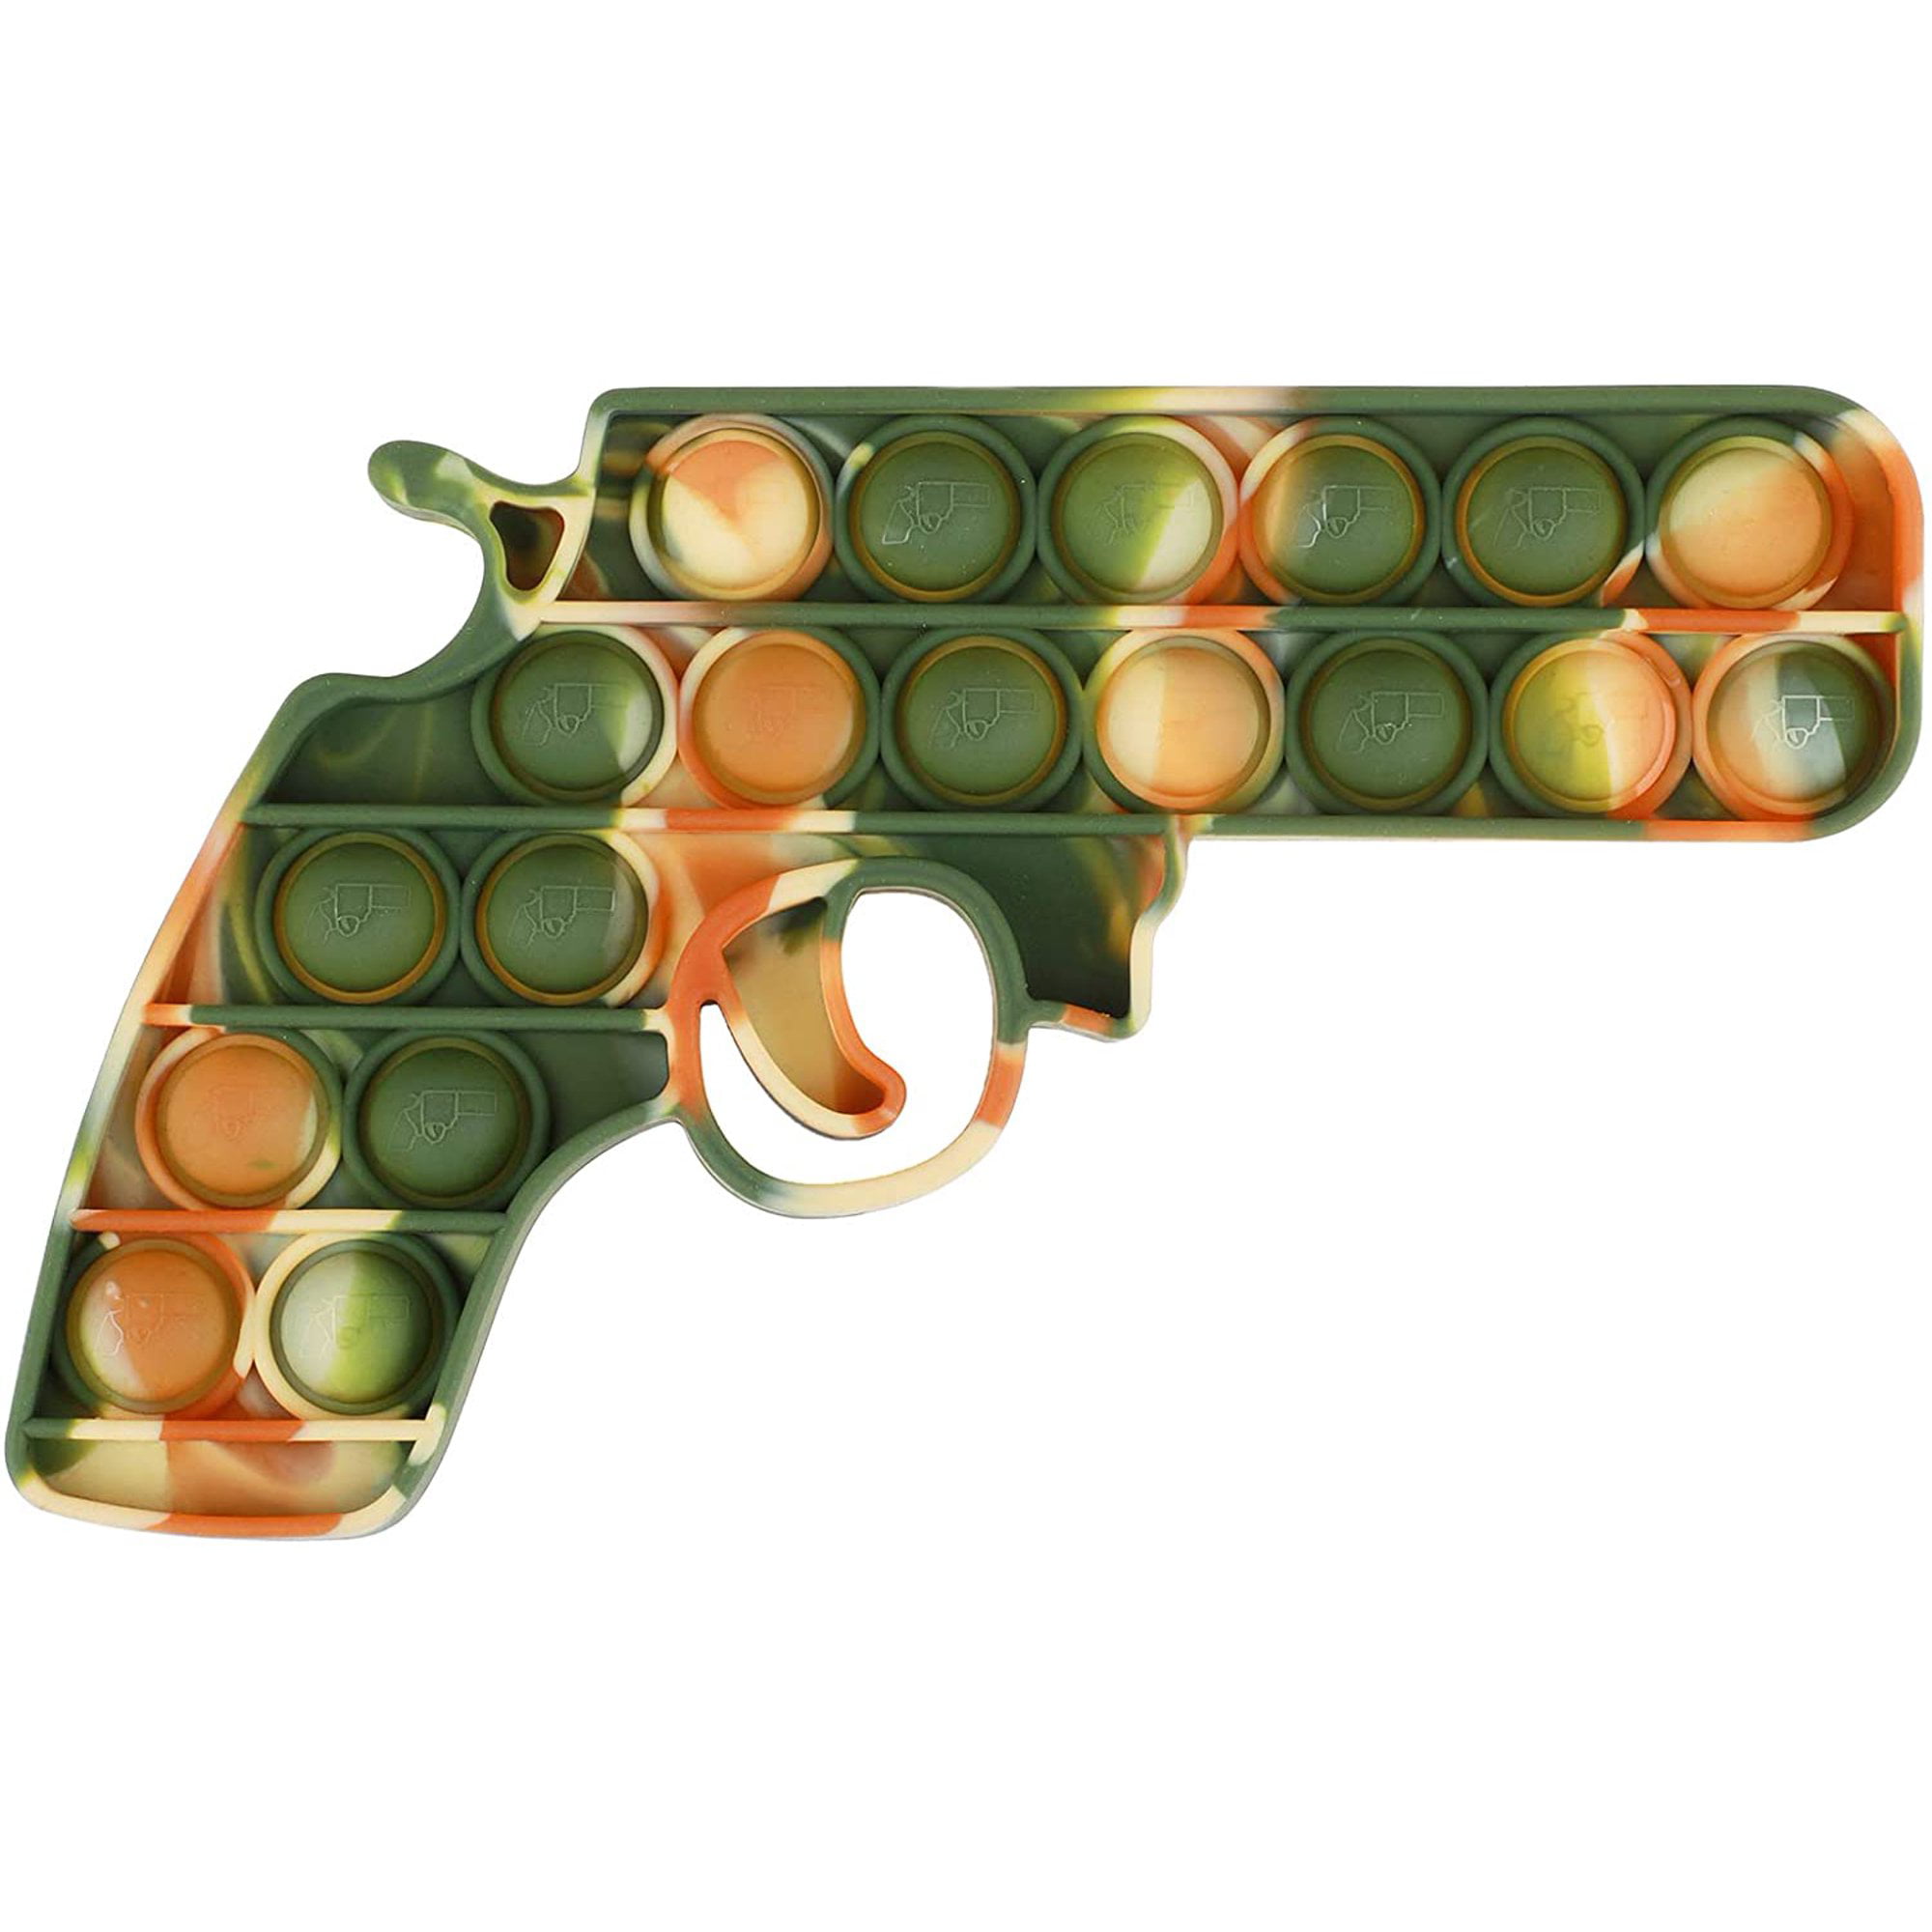 12 POTATO GUNS toy gun spuds novelty toys SPUD game toys new shoot potato pistol 